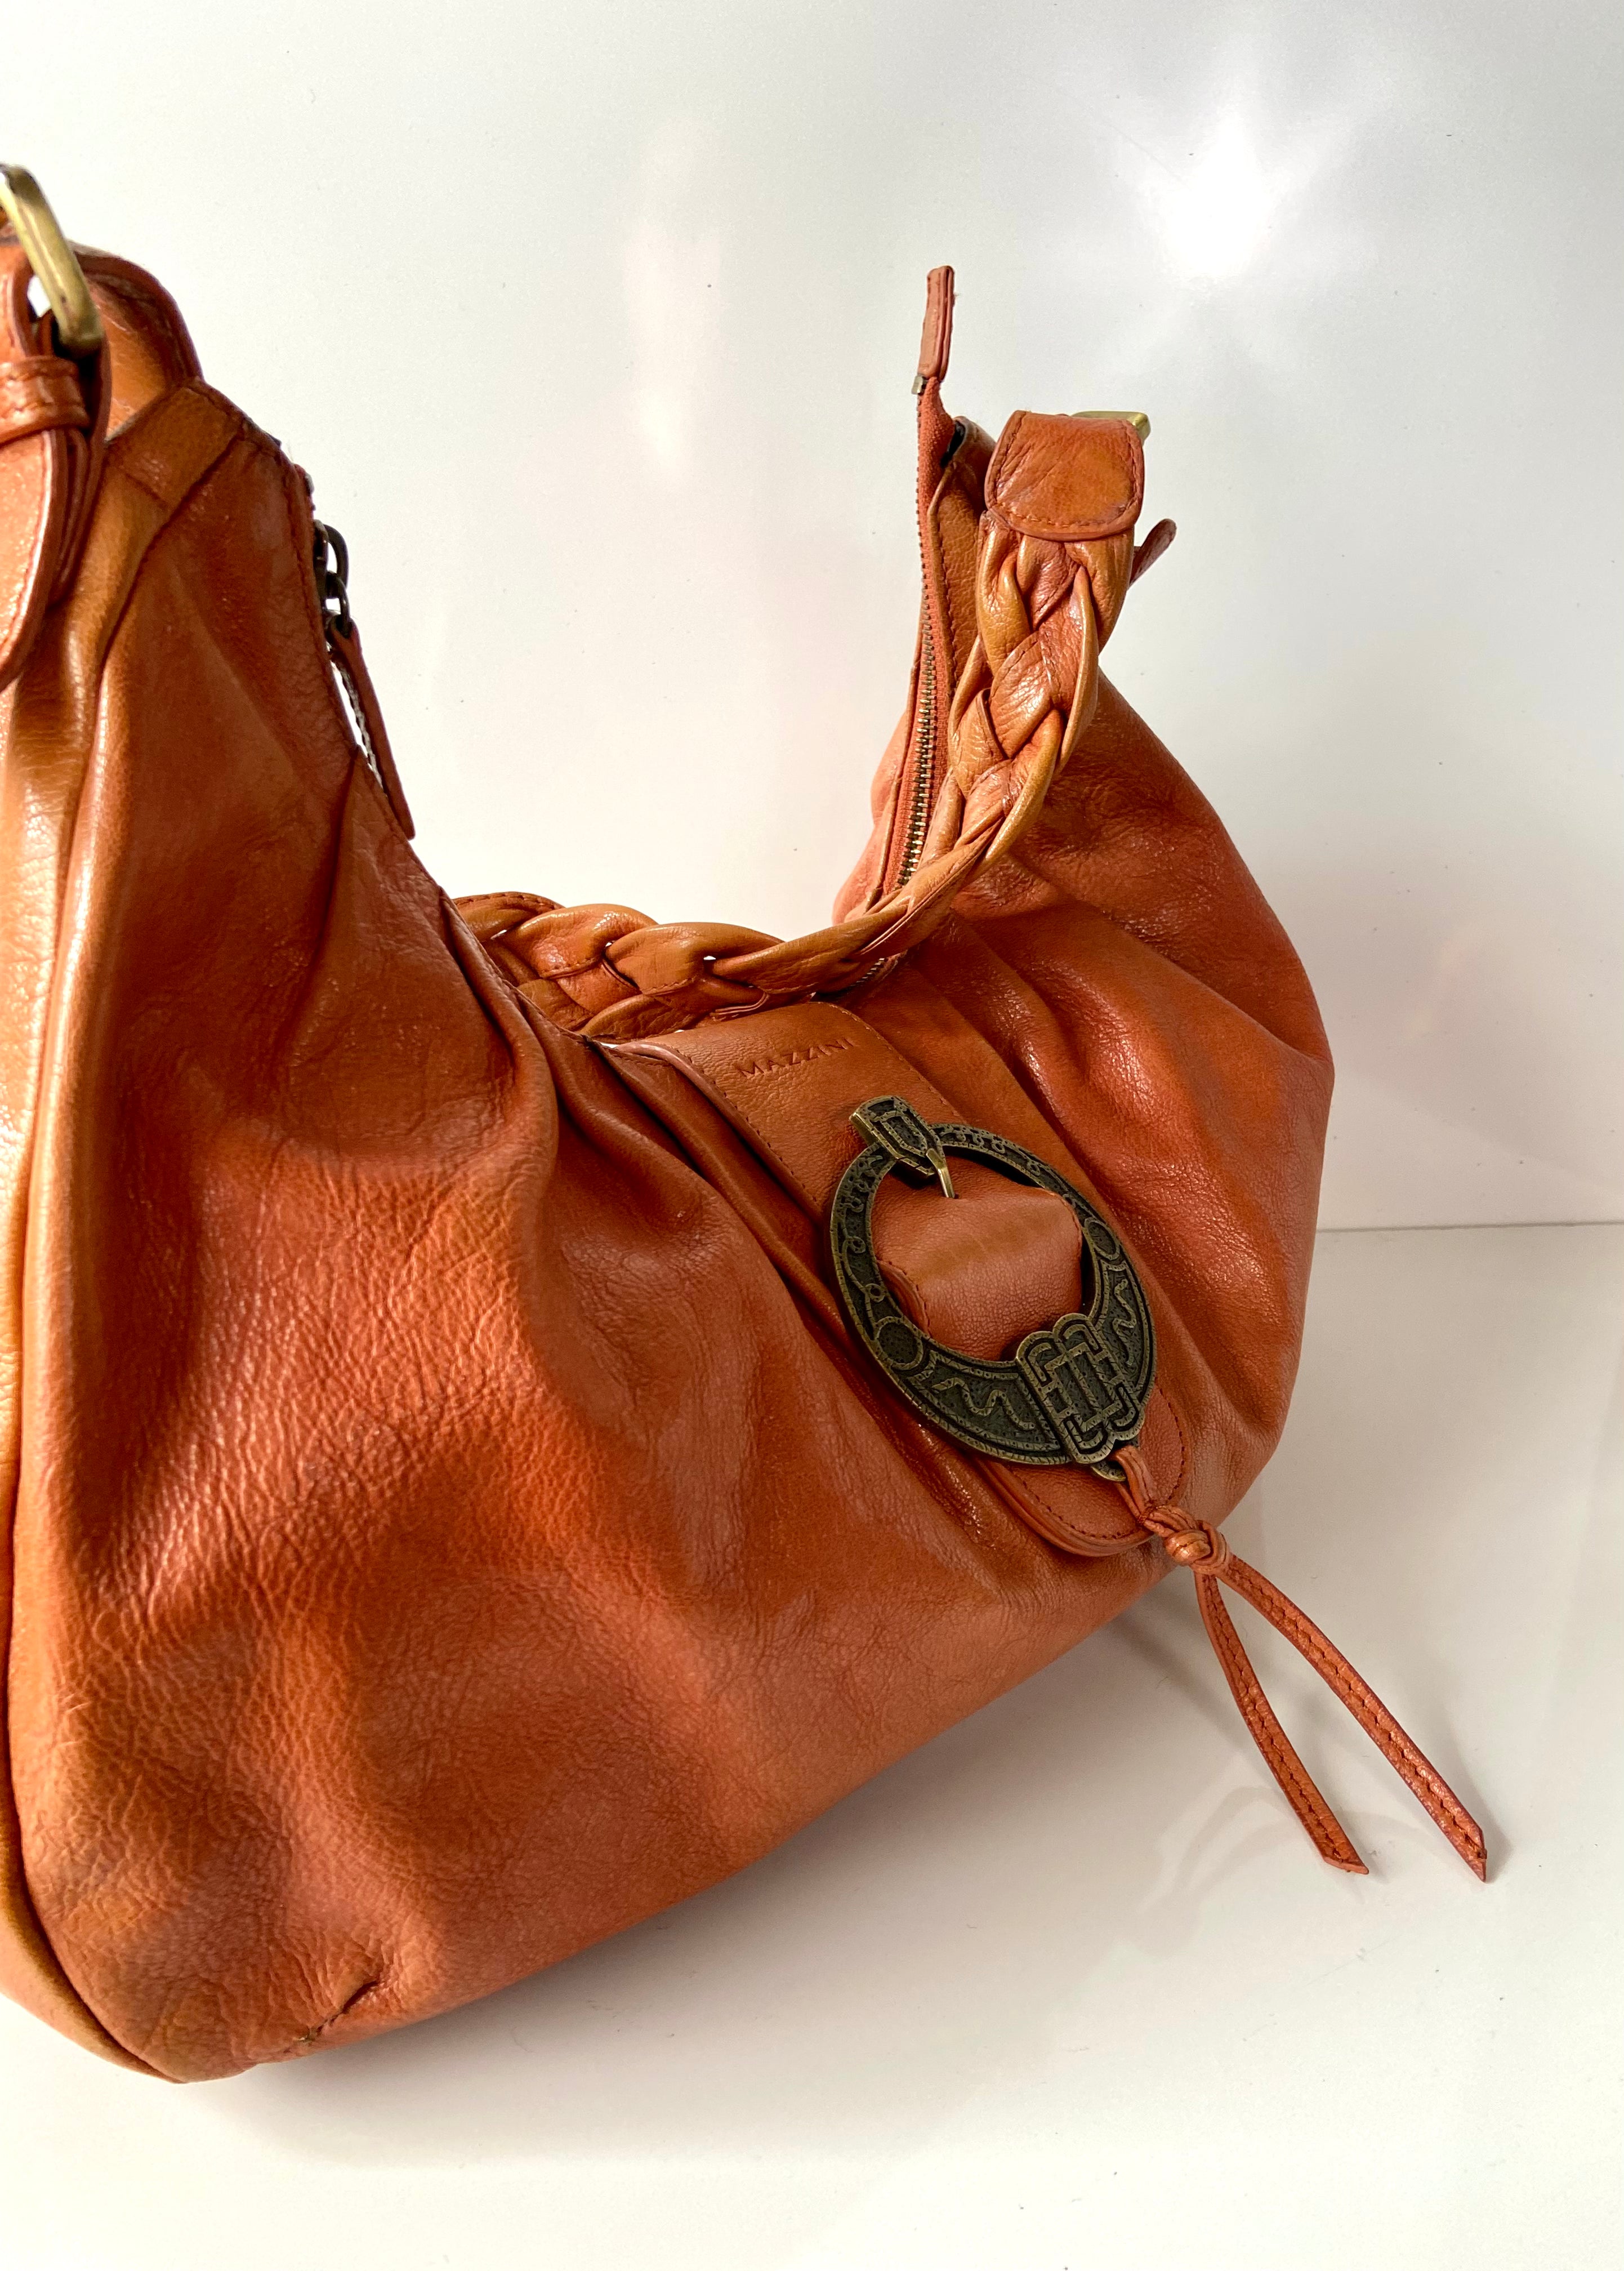 Vintage Mazzini leather bag